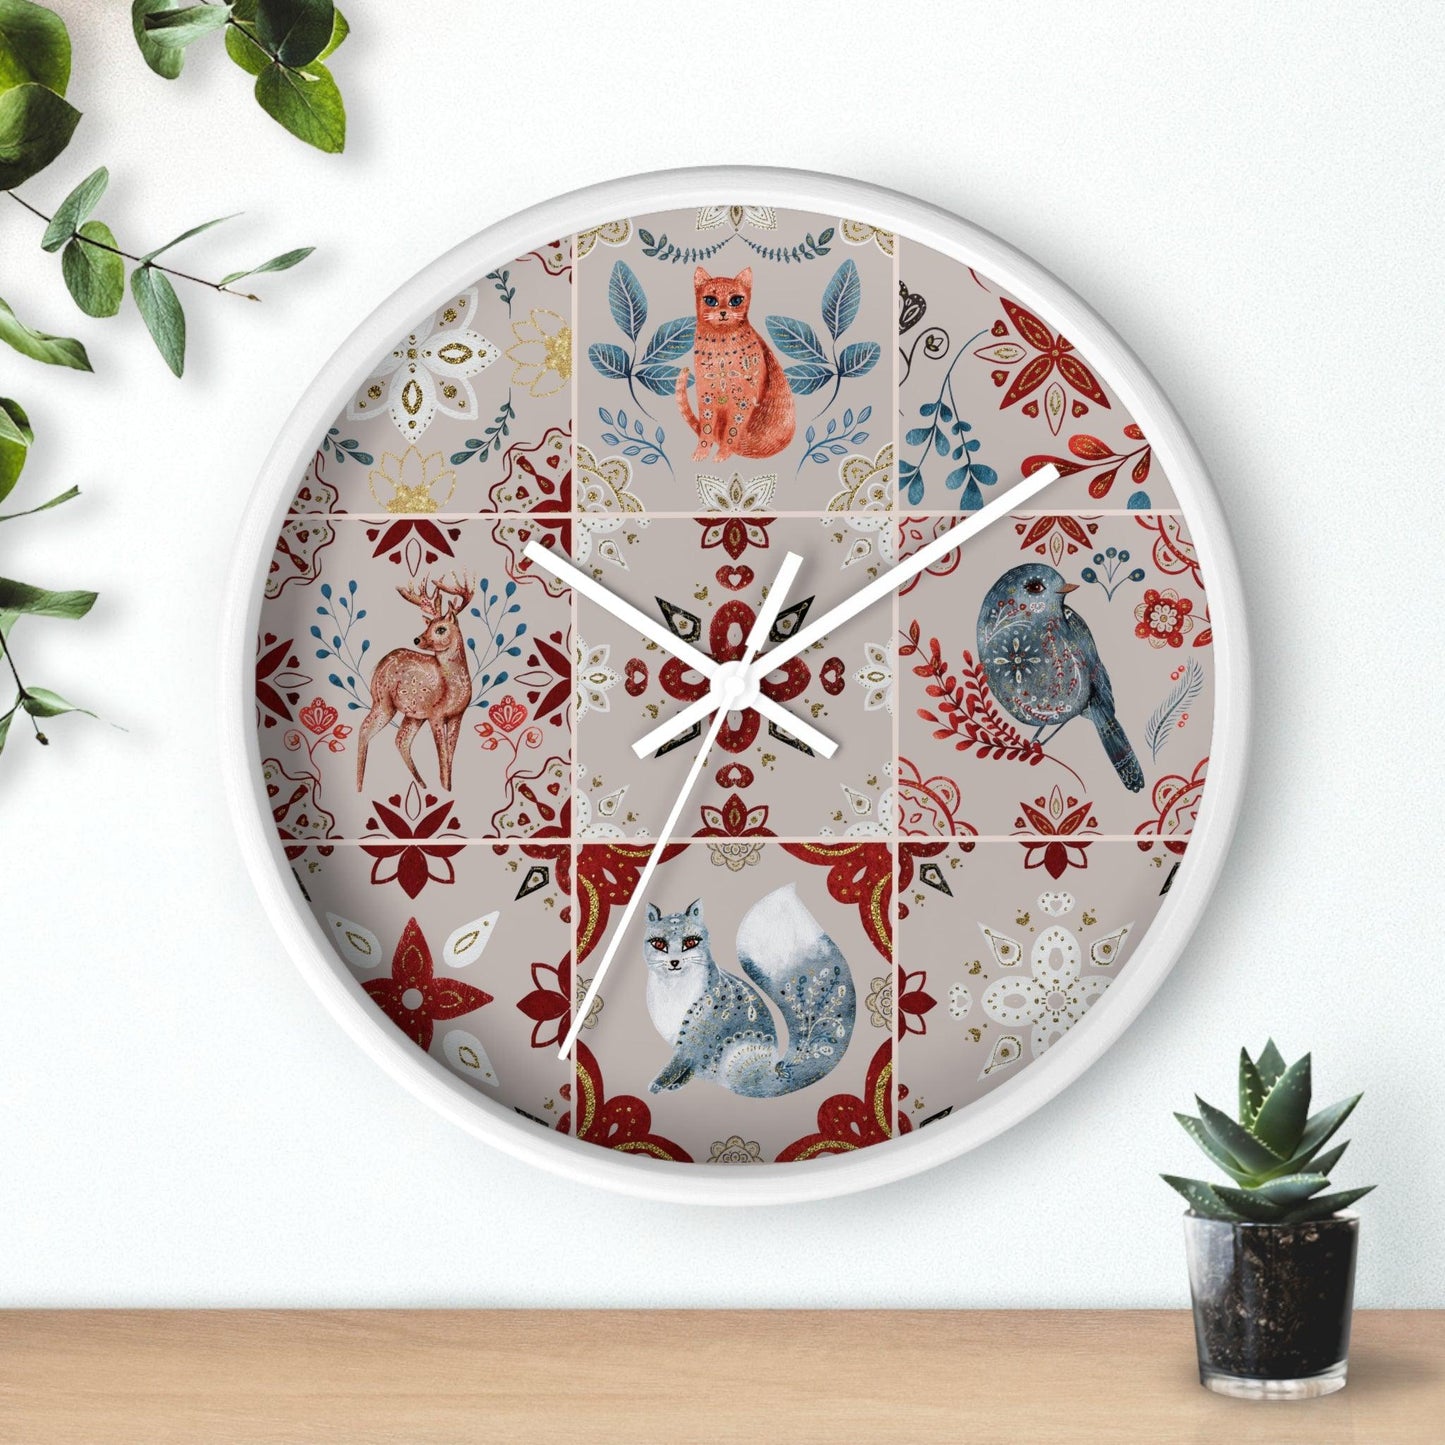 Nordic Tiles Wall Clock - The Global Wanderer